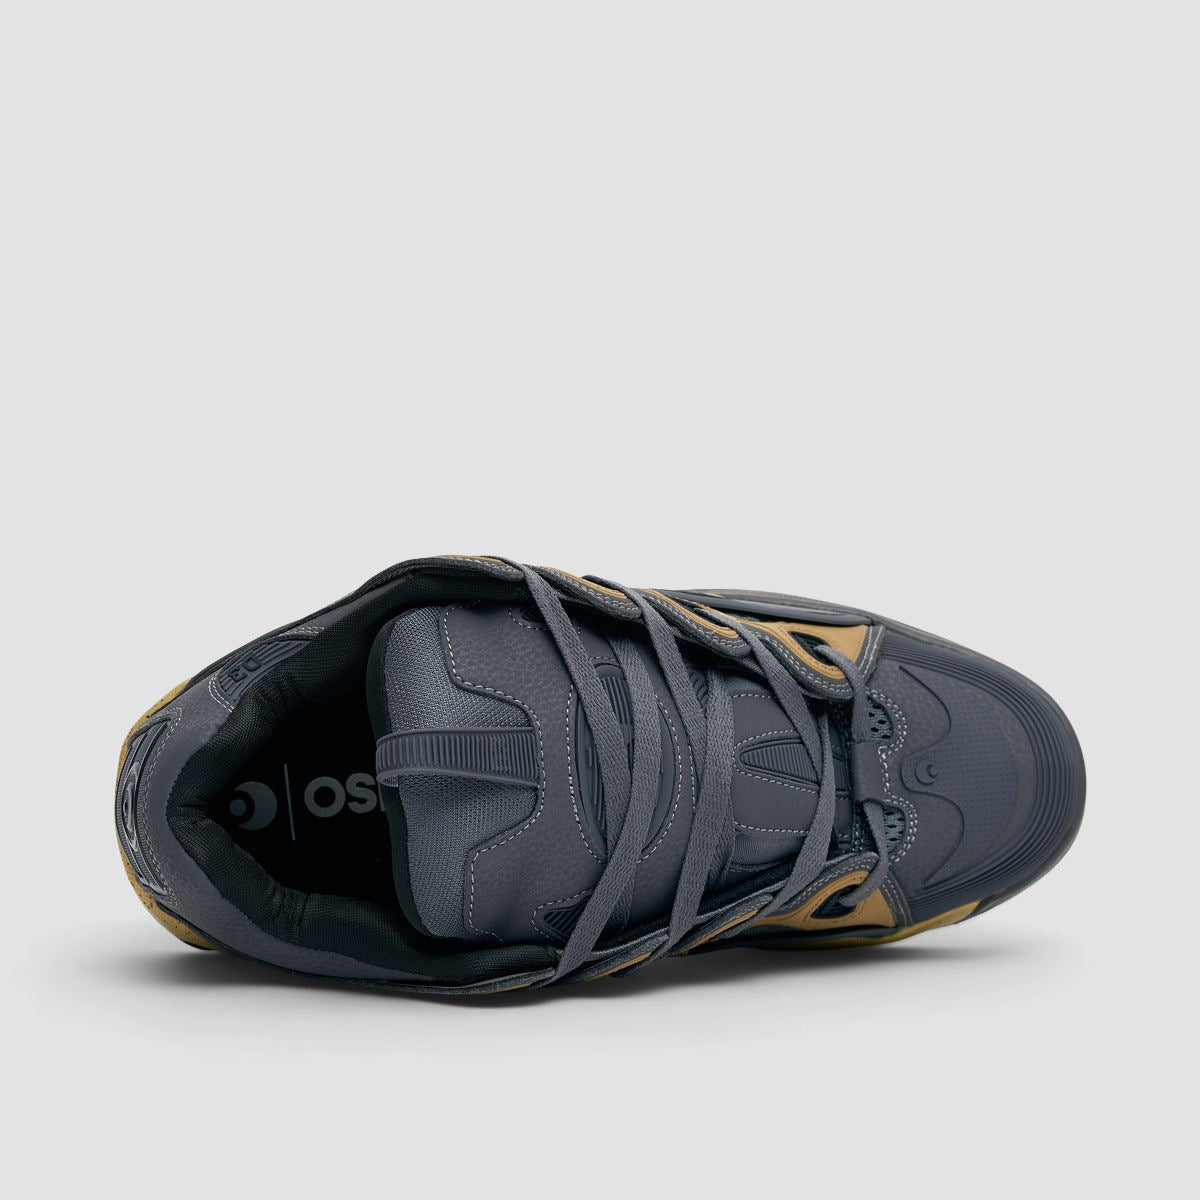 Osiris D3 2001 Shoes - Charcoal/Gold/Black